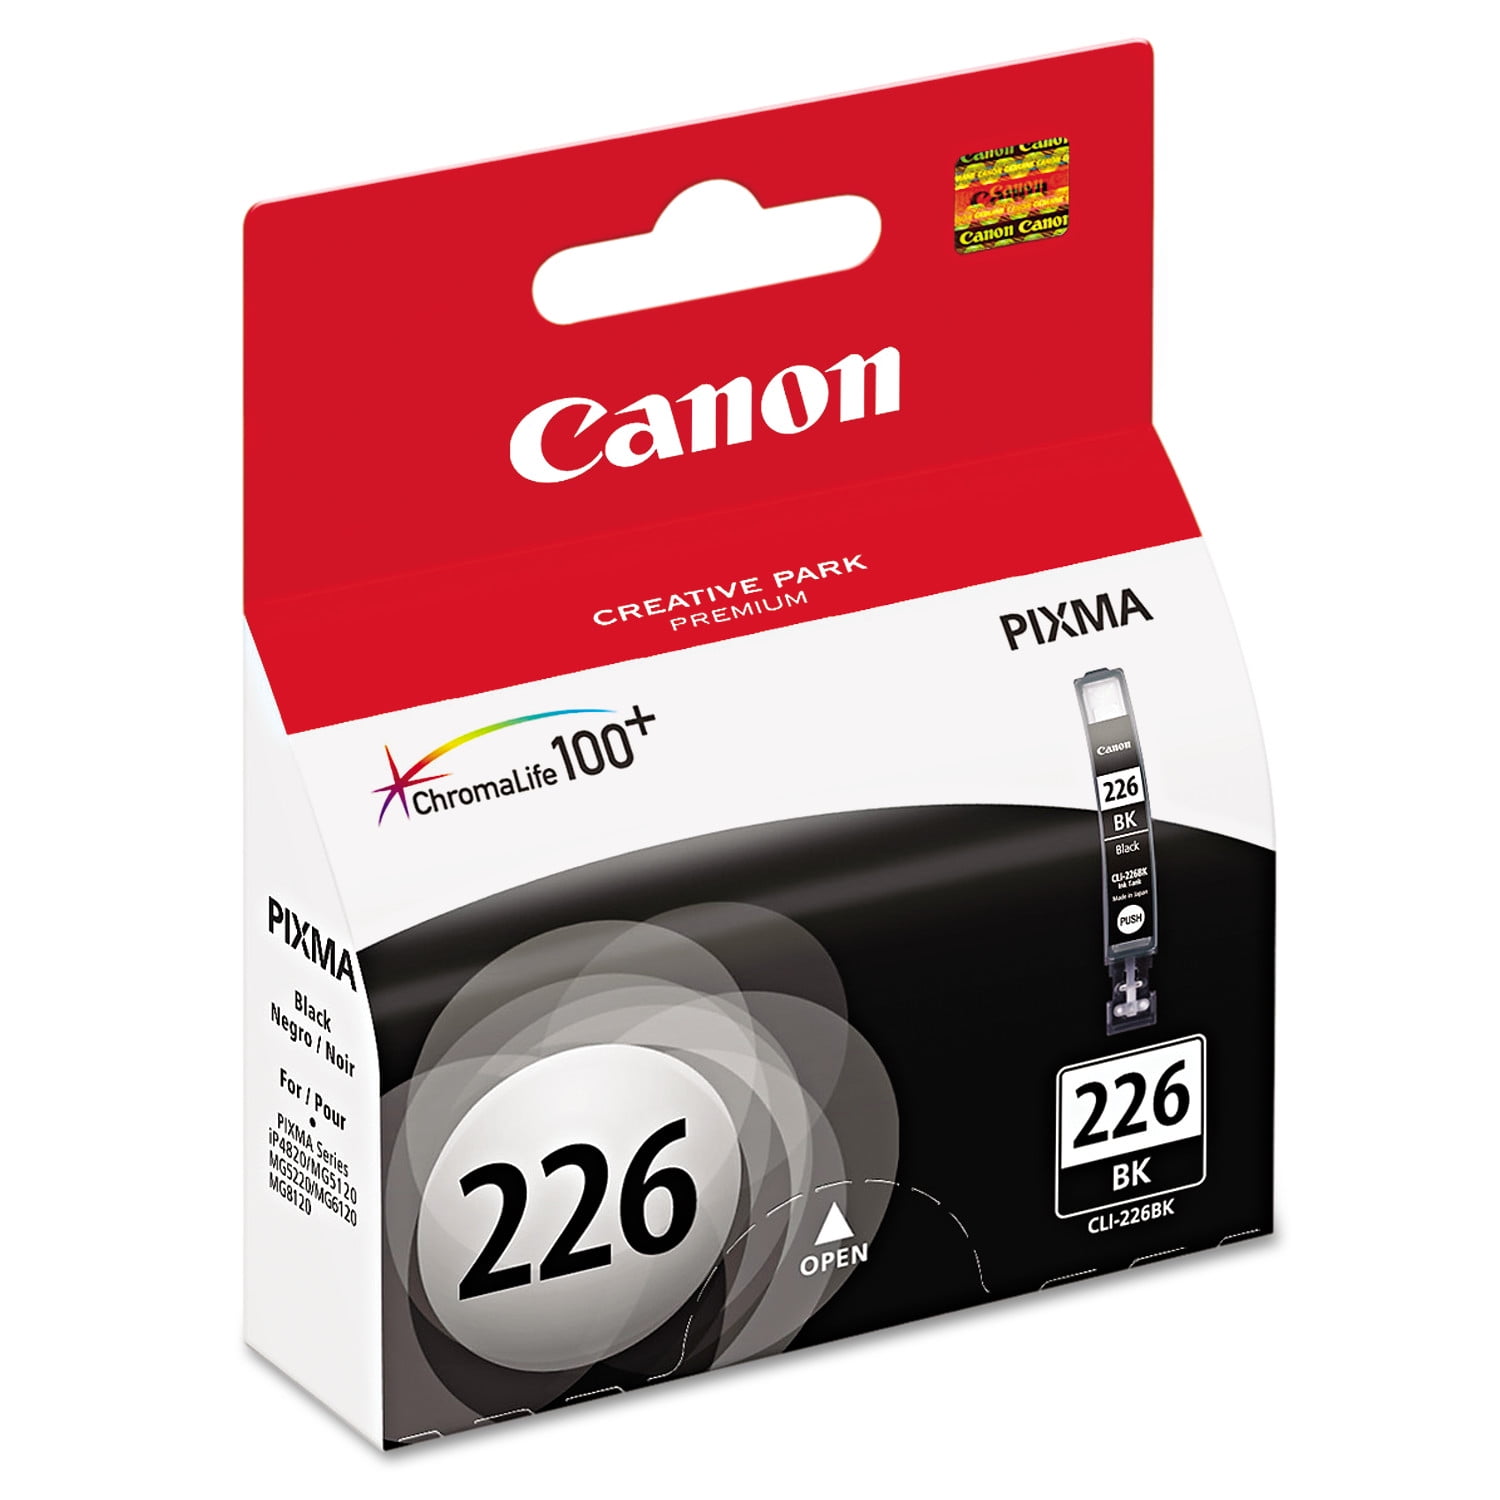 Canon Pixma Ip4820 Cartridge 660 Yield Walmart Com Walmart Com